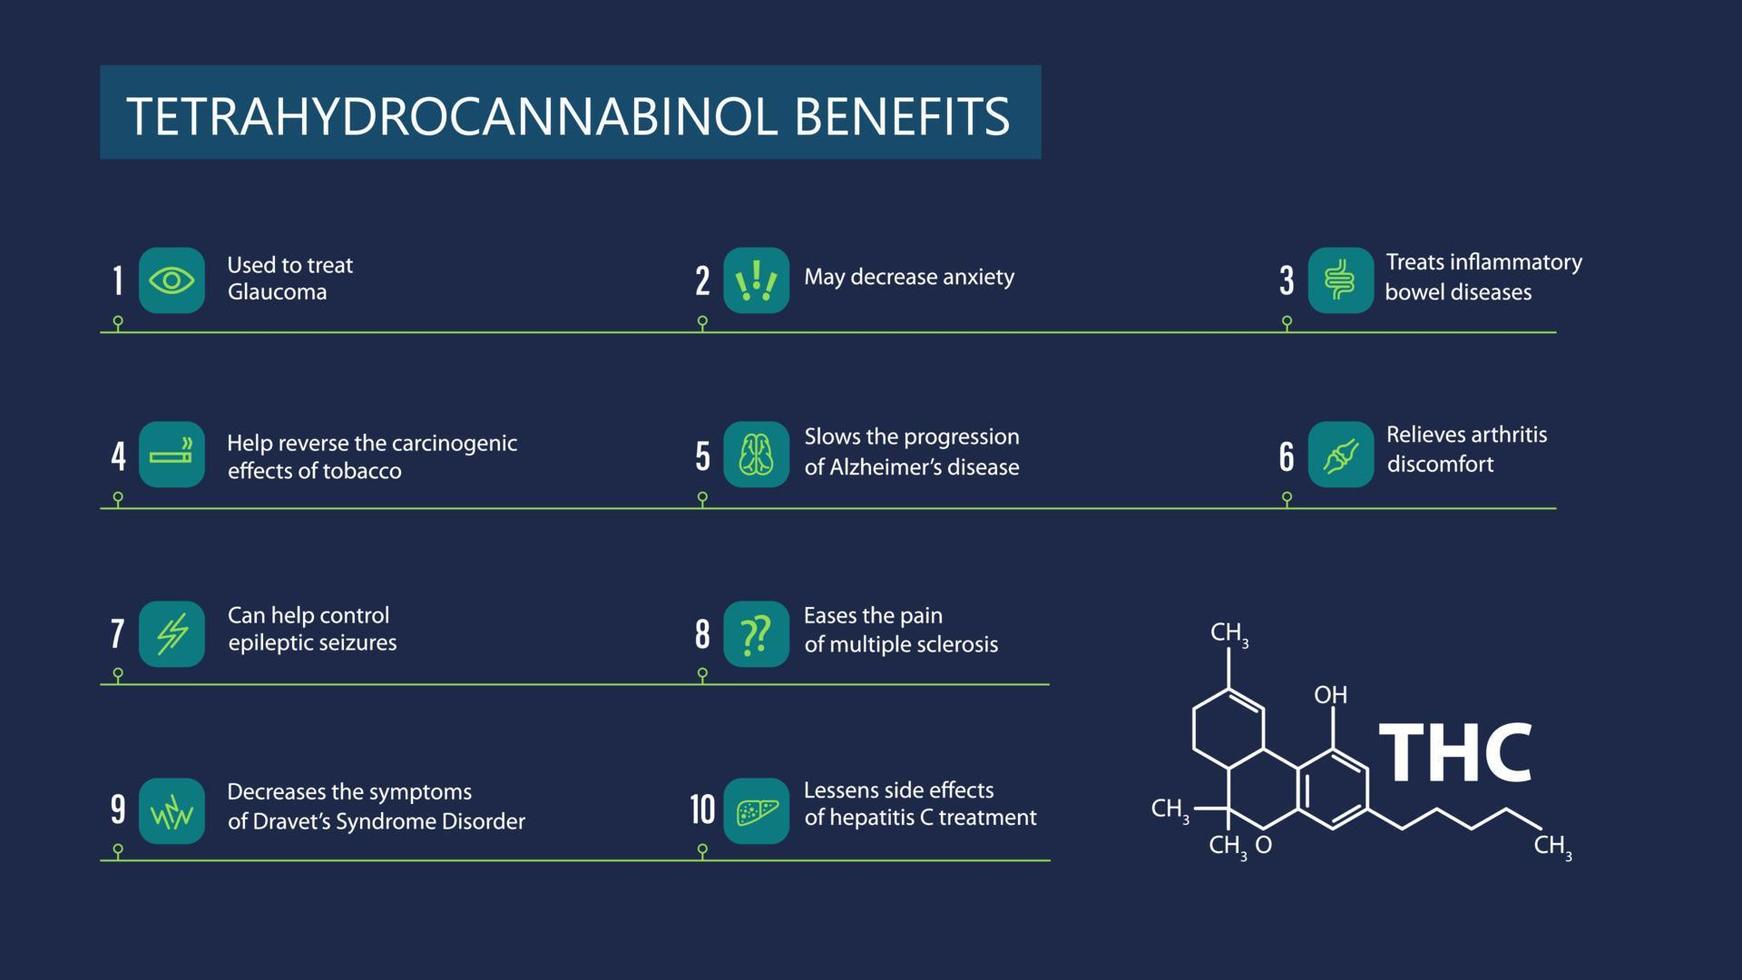 Tetrahydrocannabinol Benefits, blue poster with benefits with icons and tetrahydrocannabinol chemical formula in minimalistic style vector